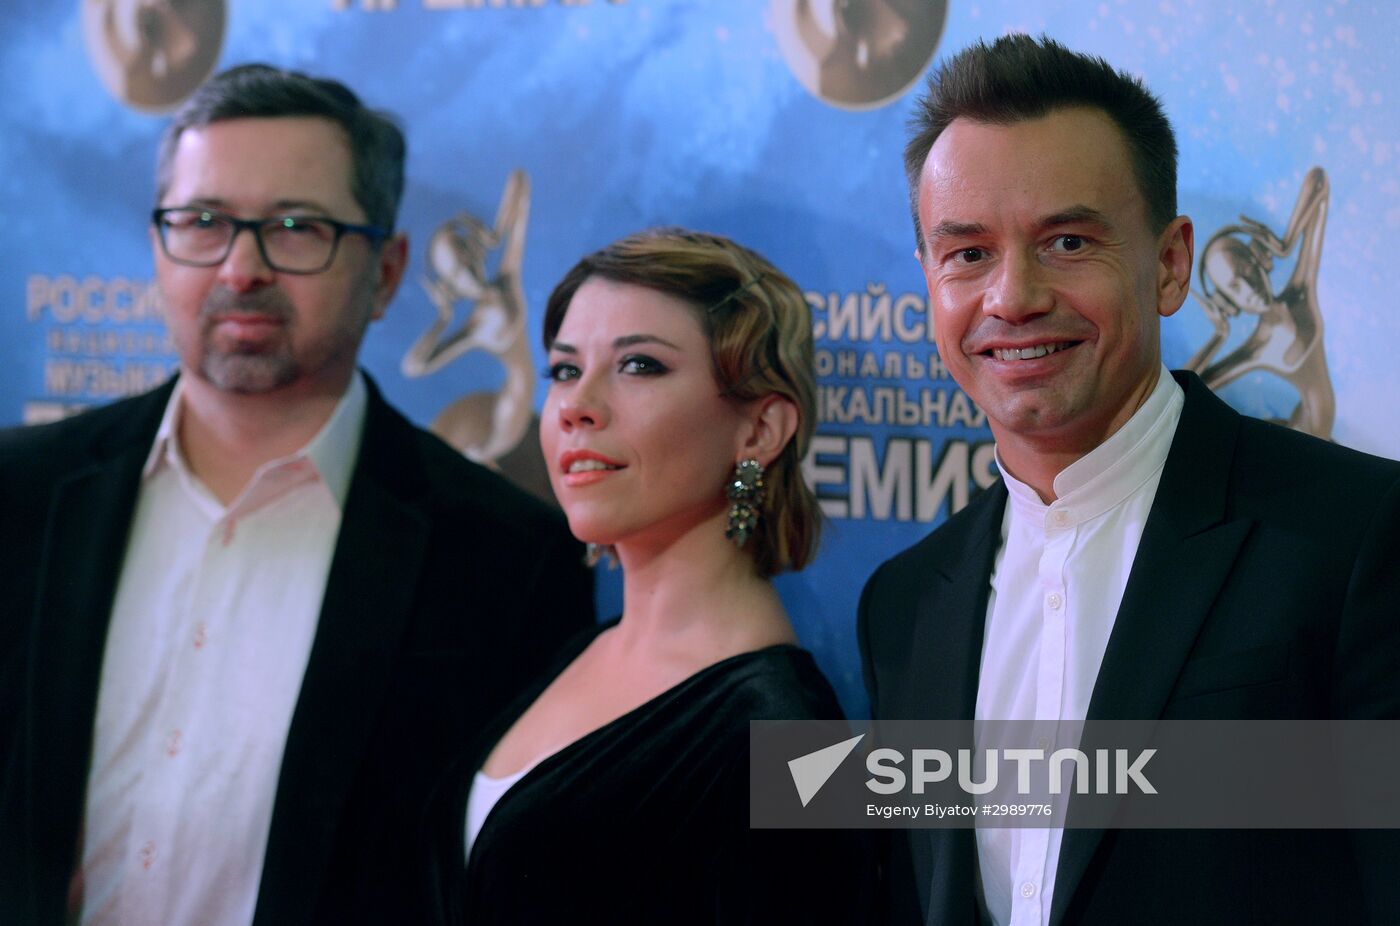 Russian National Music Awards